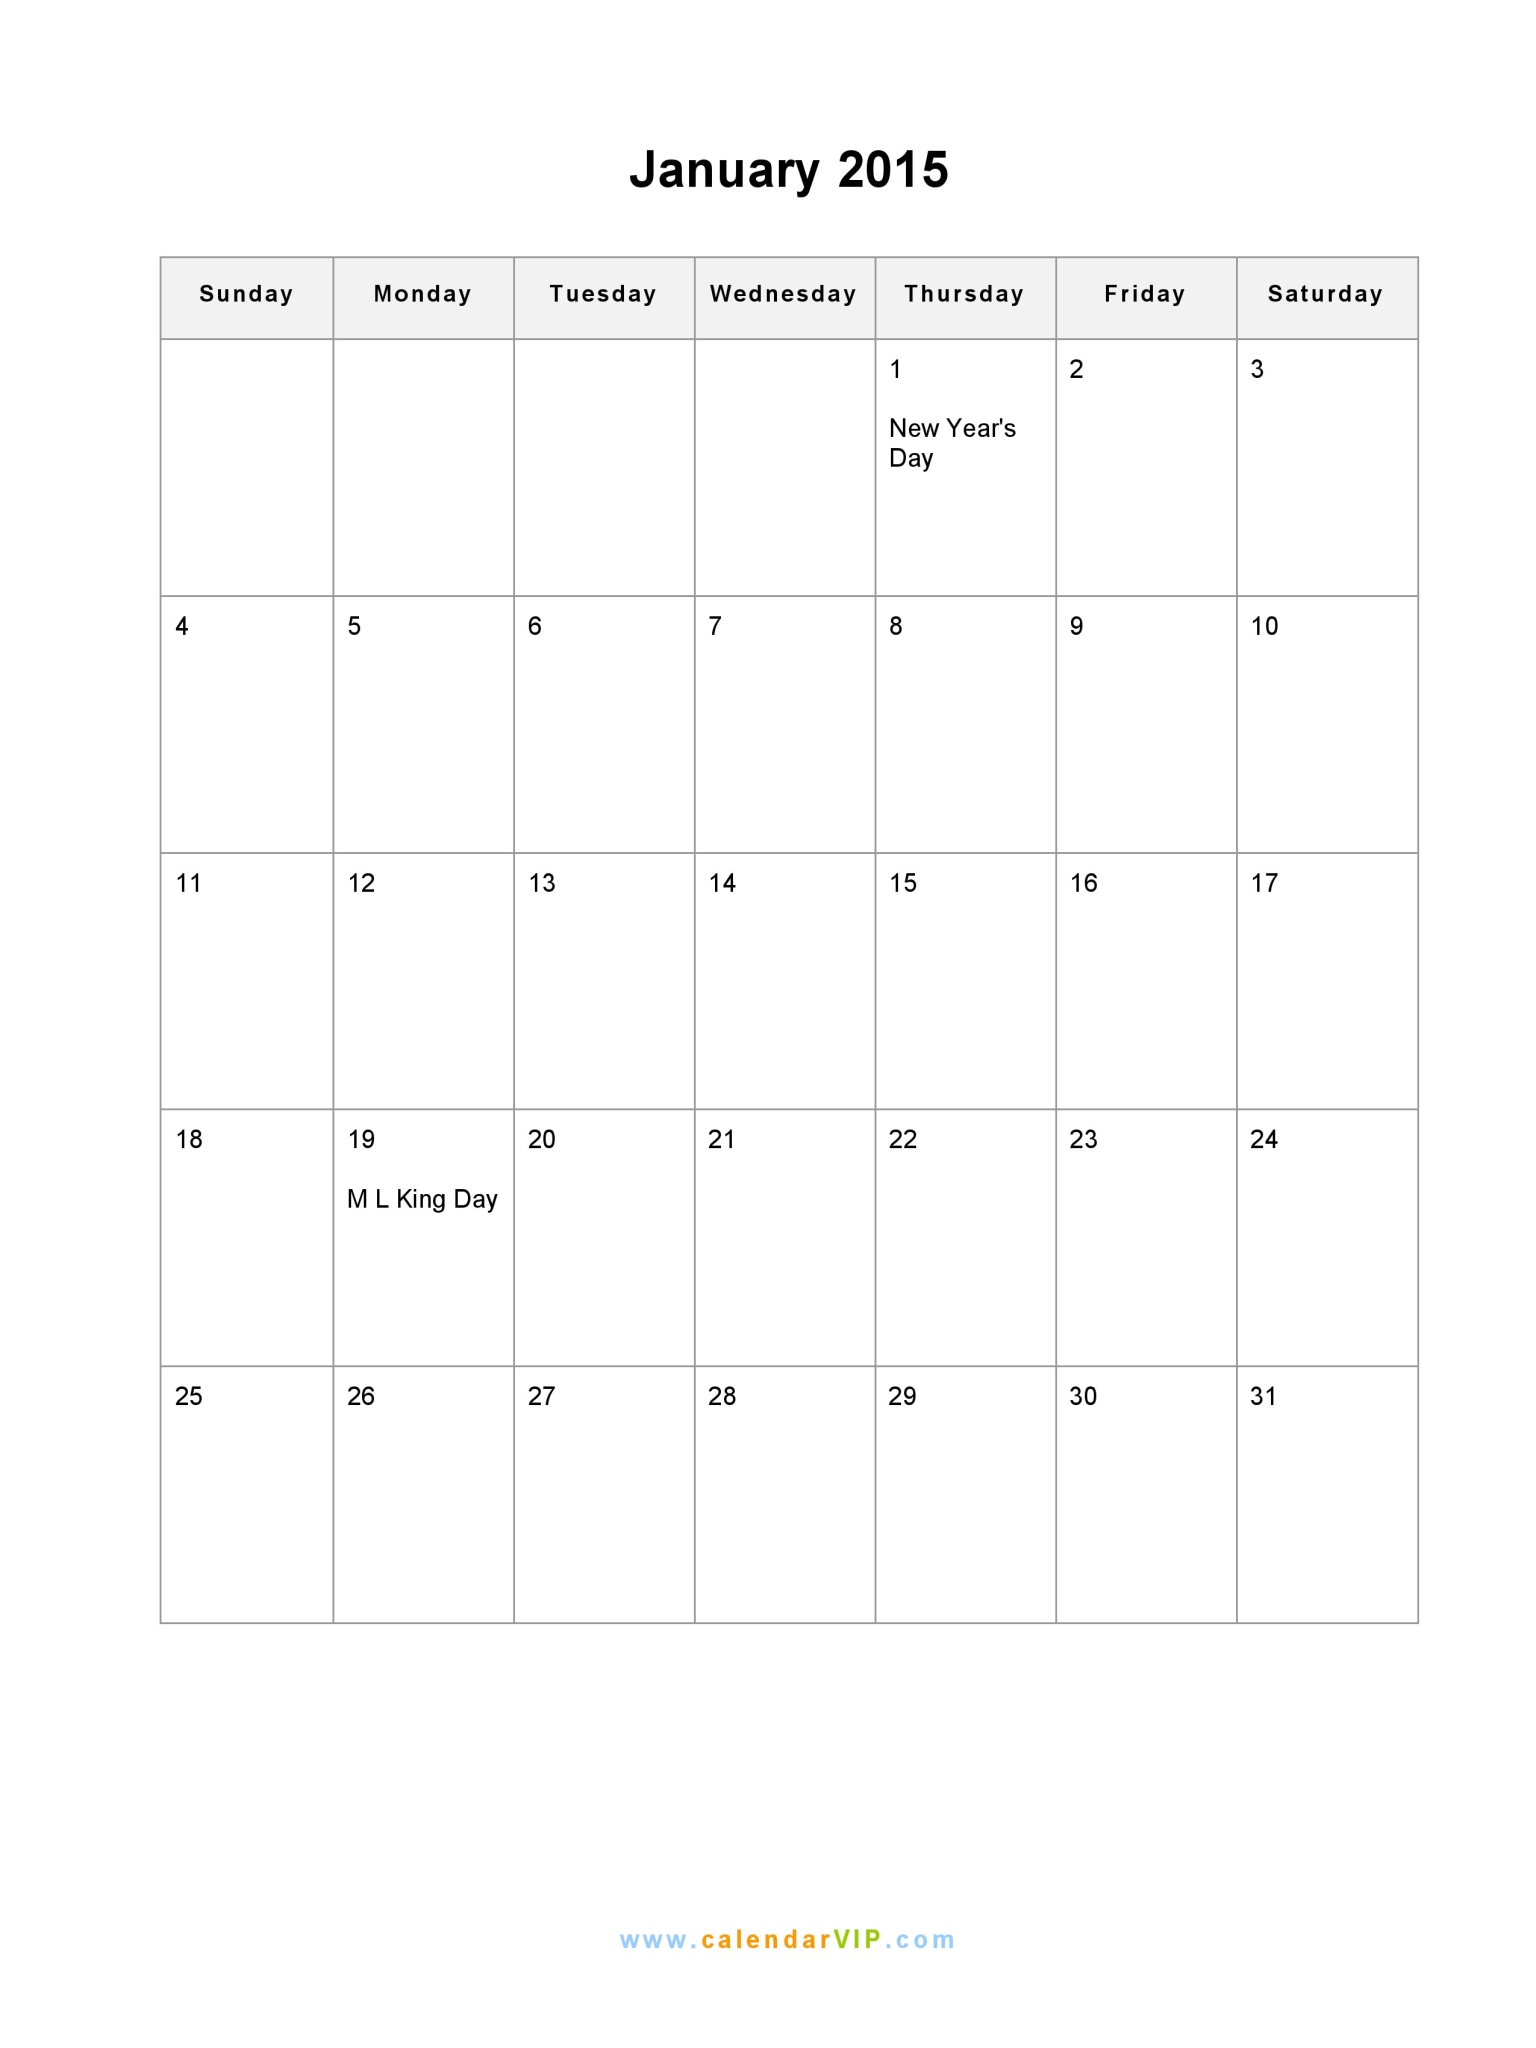 January 2015 Calendar - Blank Printable Calendar Template in PDF Word Excel1536 x 2048